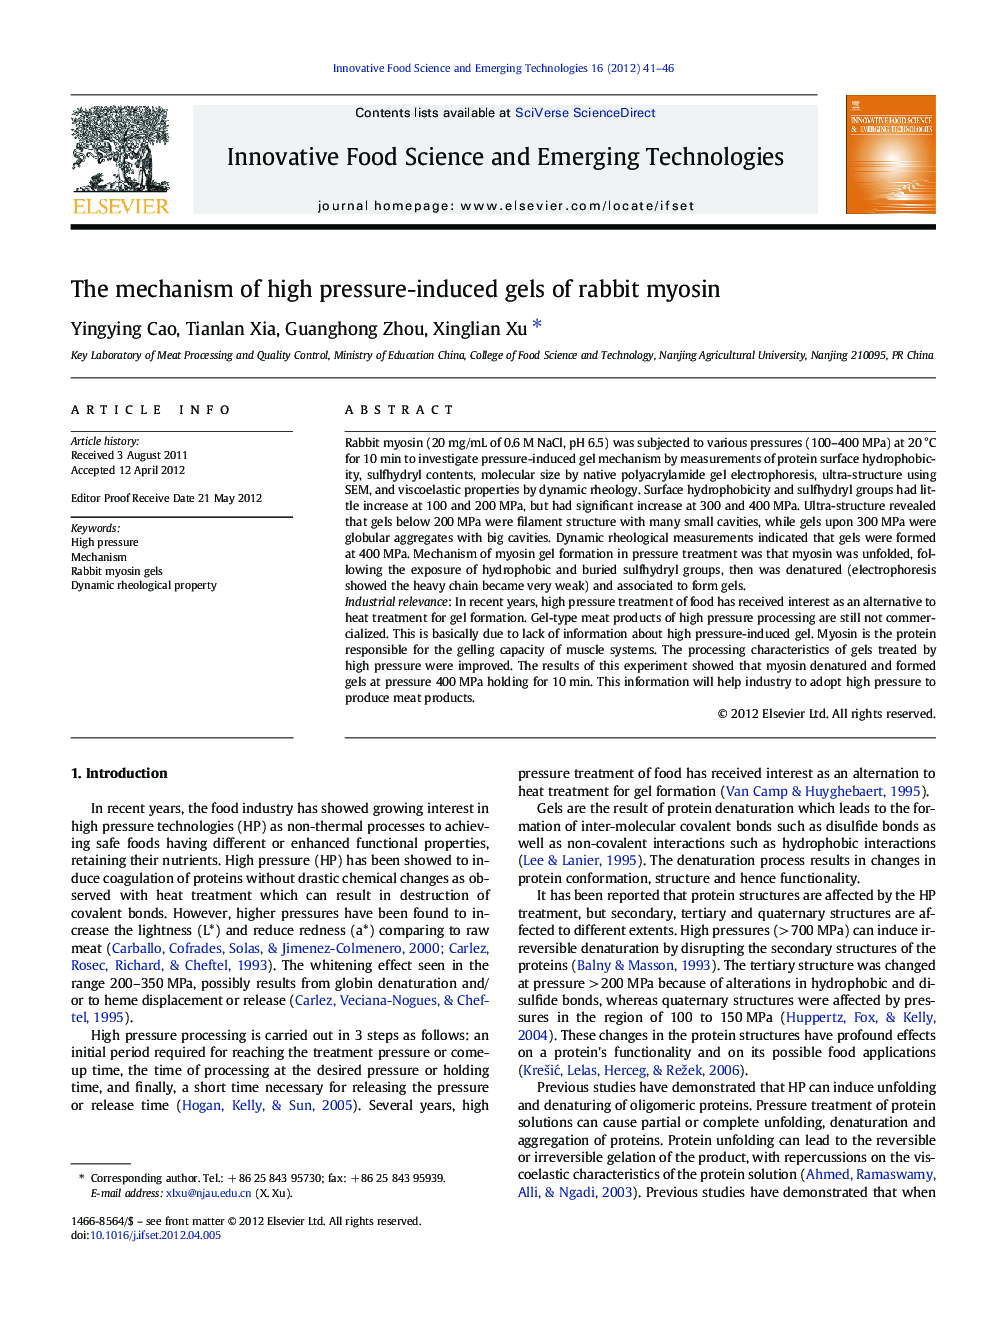 The mechanism of high pressure-induced gels of rabbit myosin